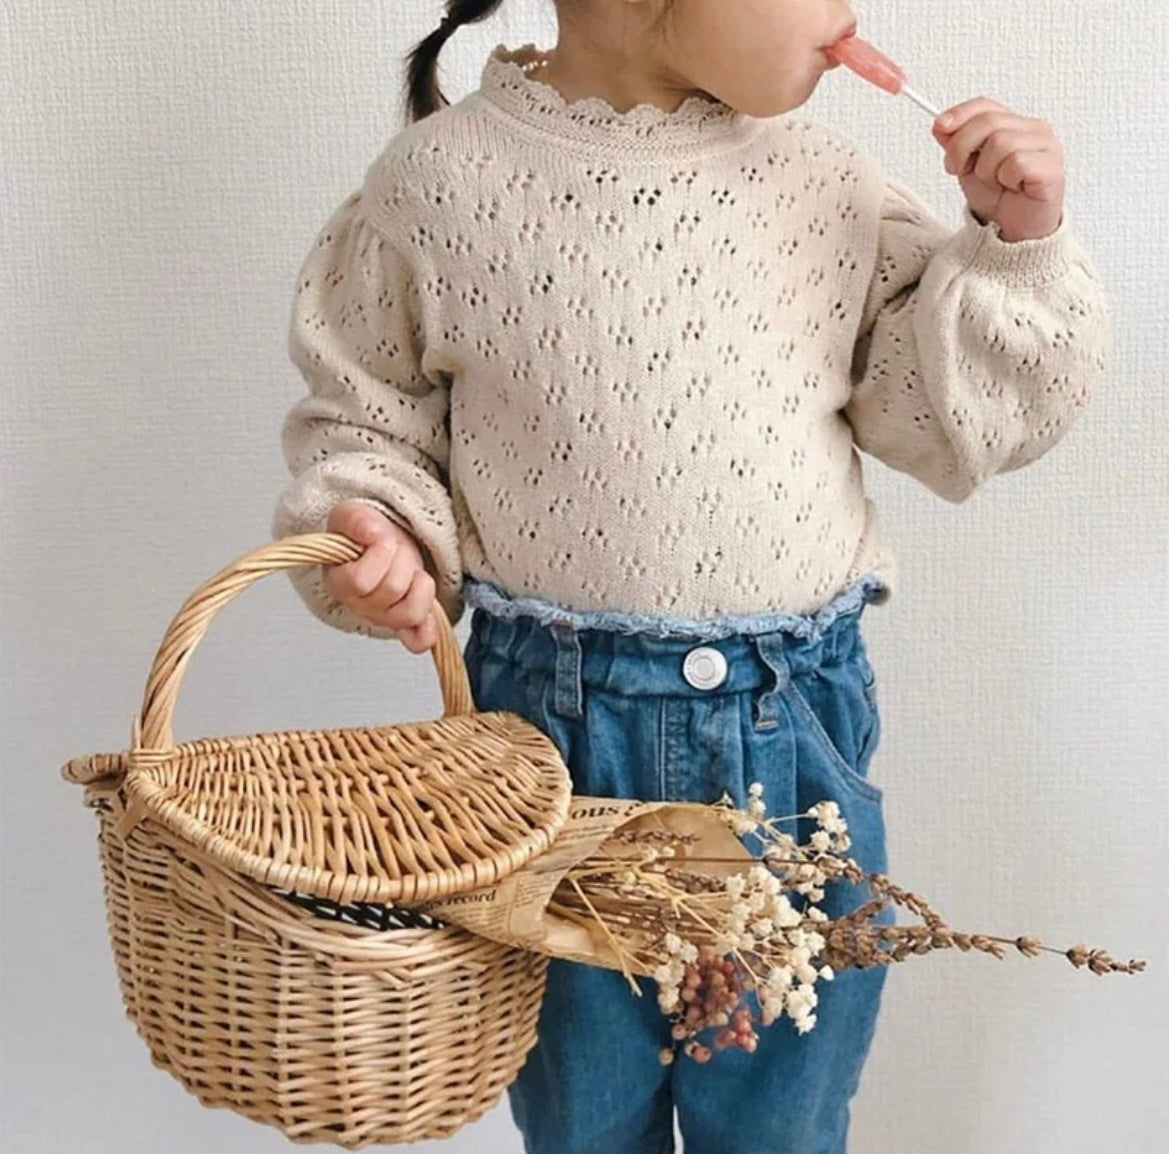 Celia - Girls Crochet Knitted Top.